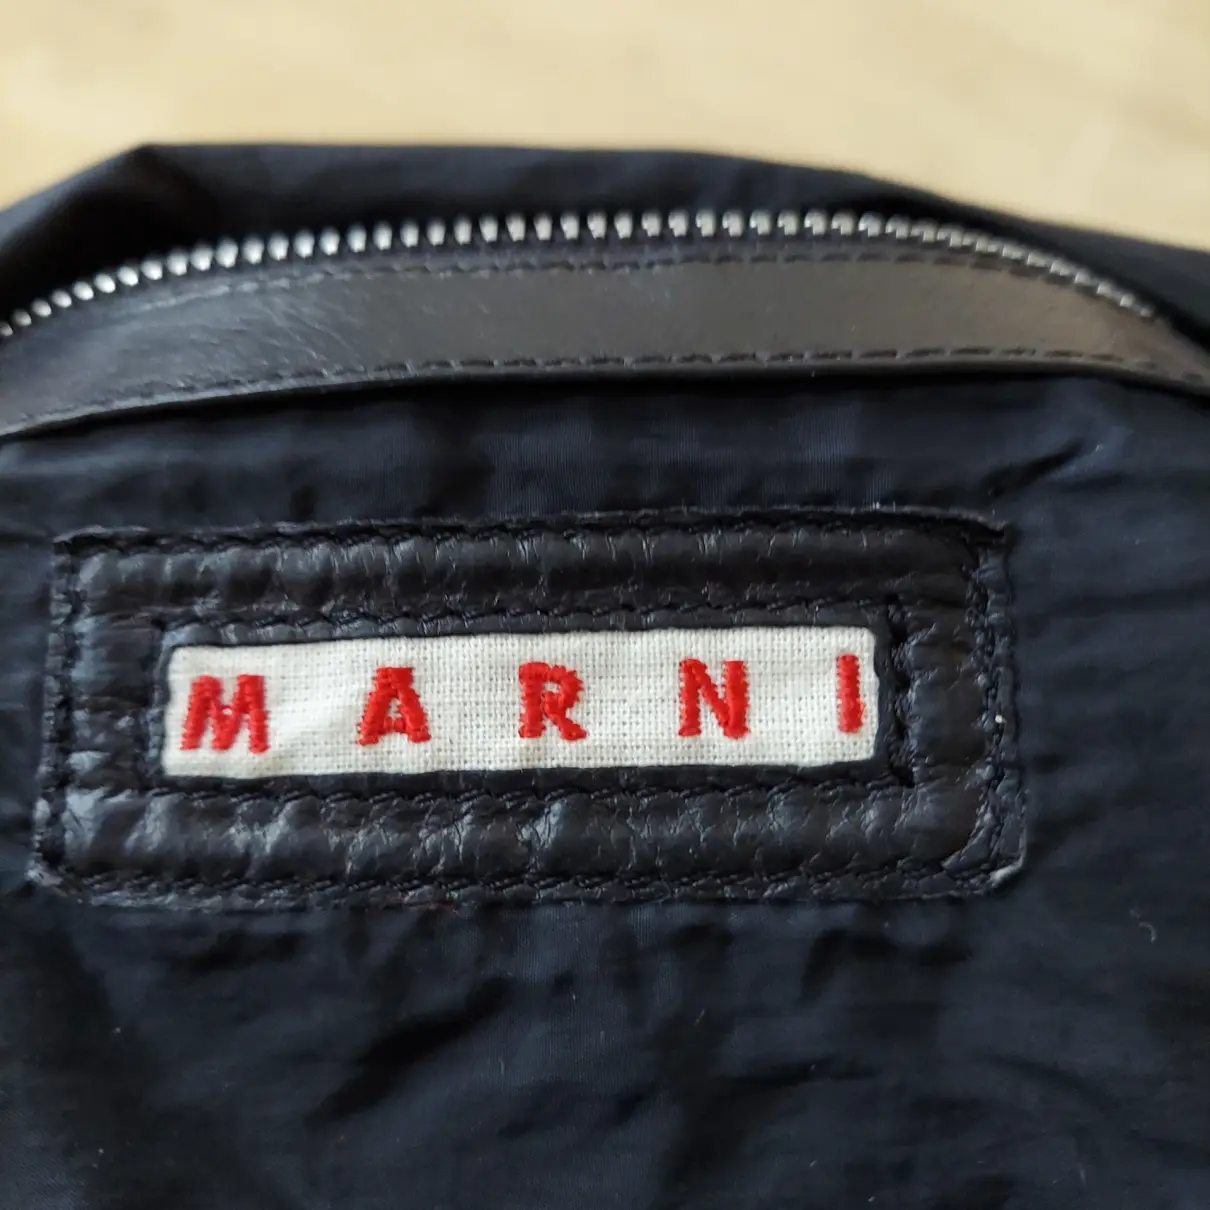 Buy Marni Leather satchel online